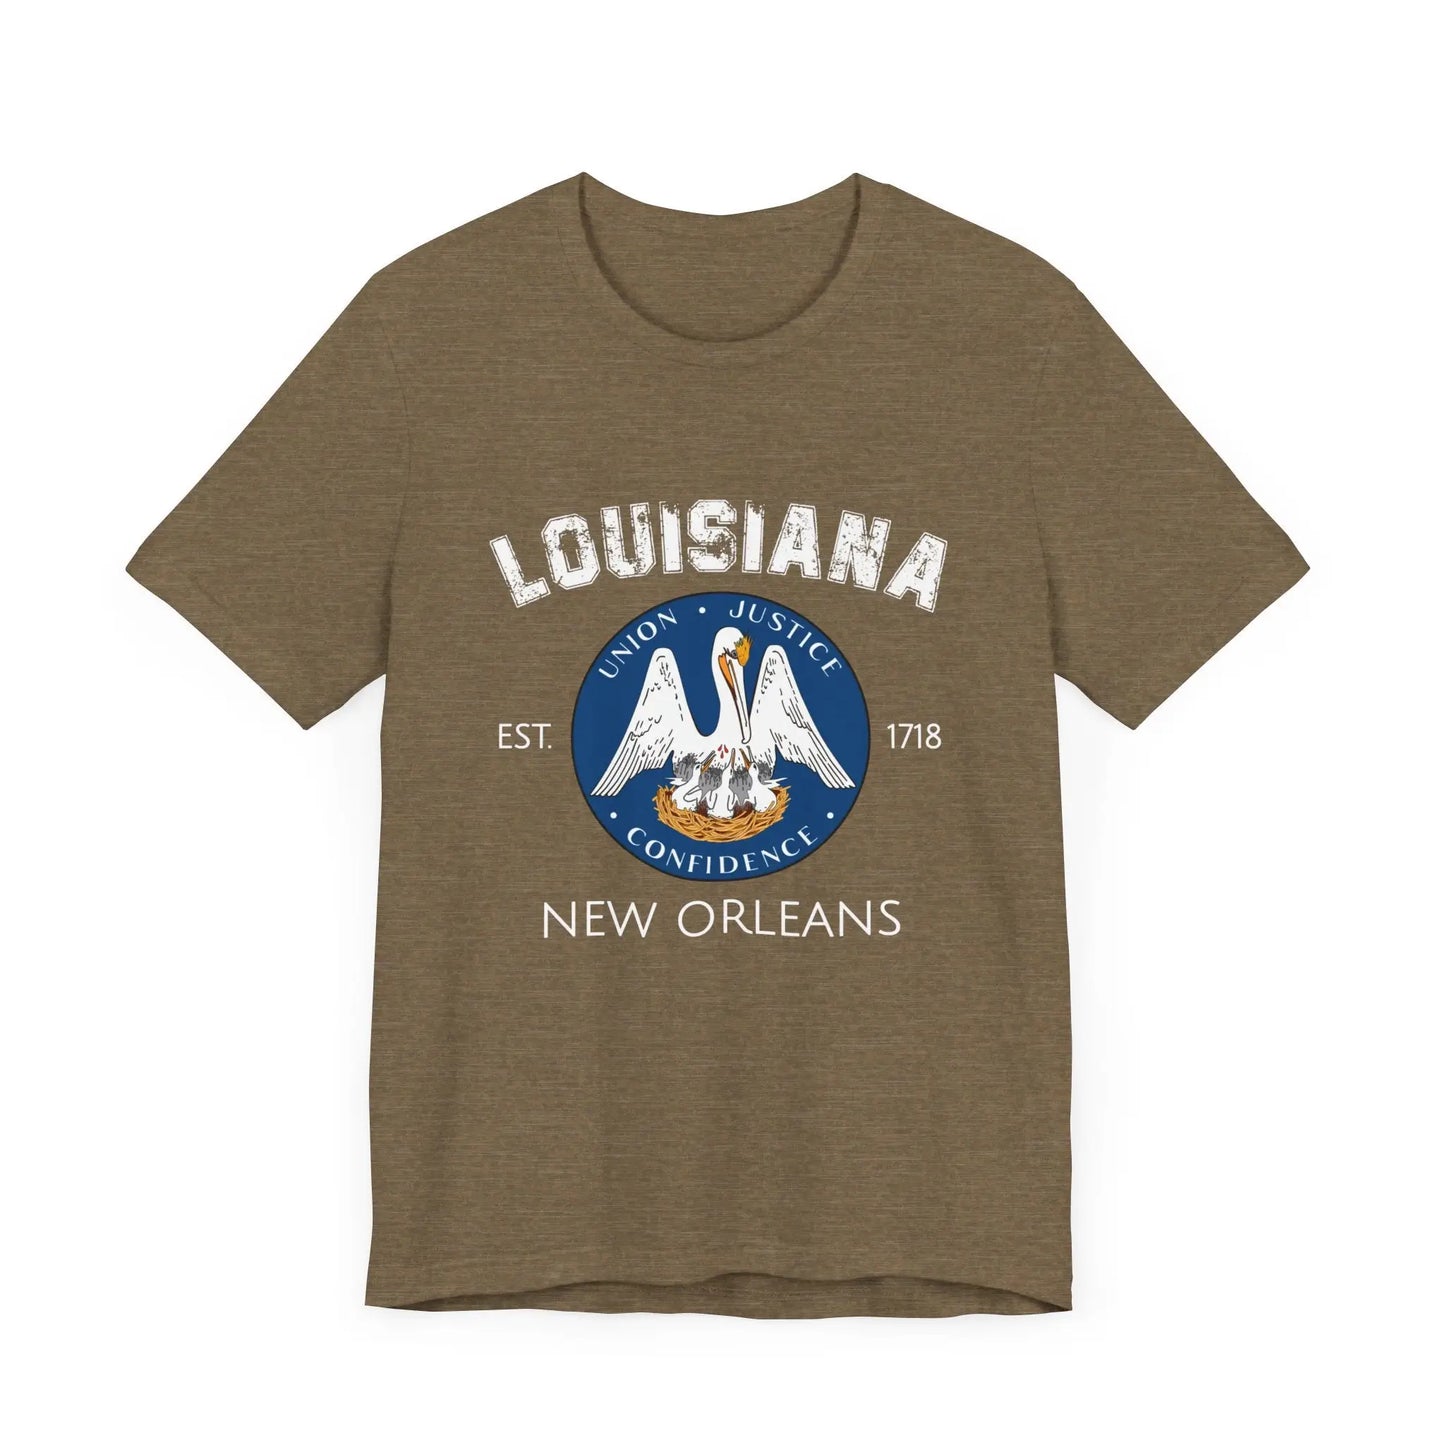 New Orleans Louisiana Est 1718 Men's Tee - Wicked Tees